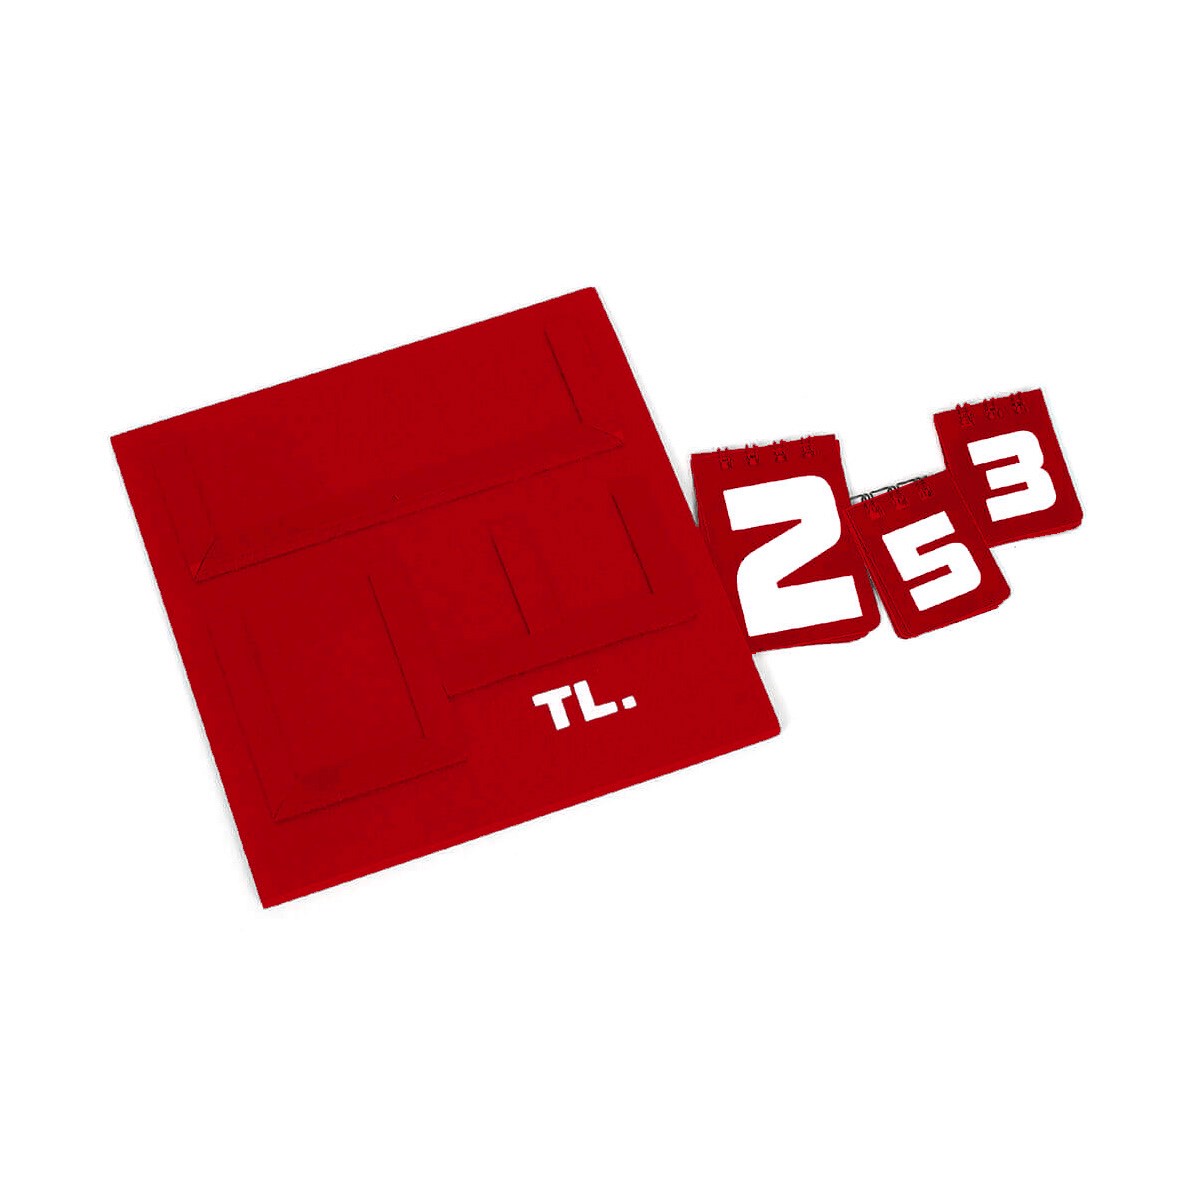 Yazılı Manav Etiketi Mini Tek Taraflı 11x13,5 cm Kırmızı.jpg (72 KB)